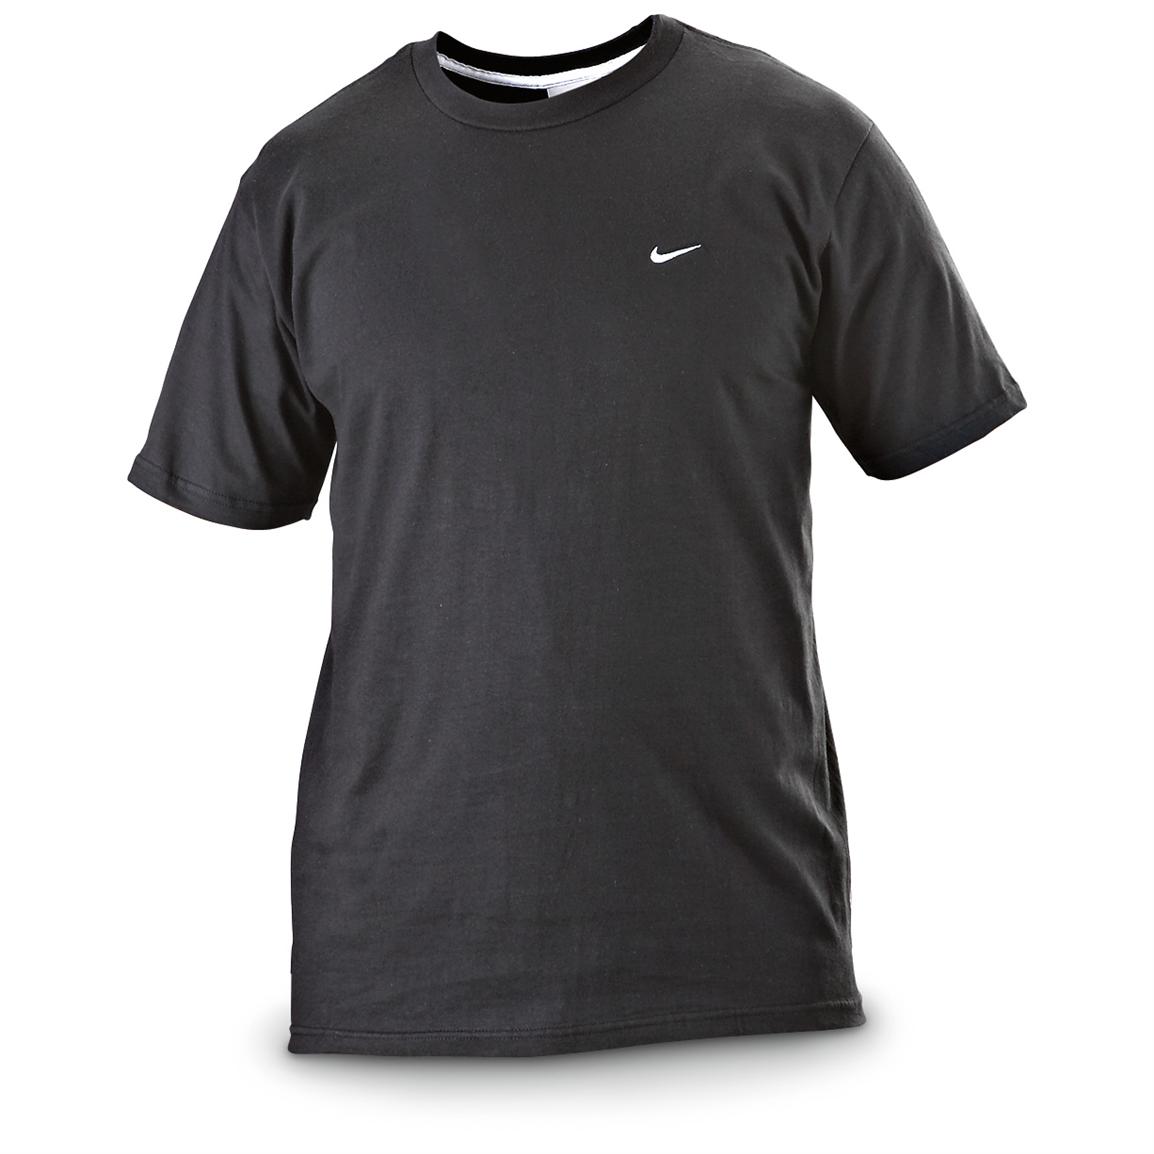 Nike Classic Swoosh T-shirt